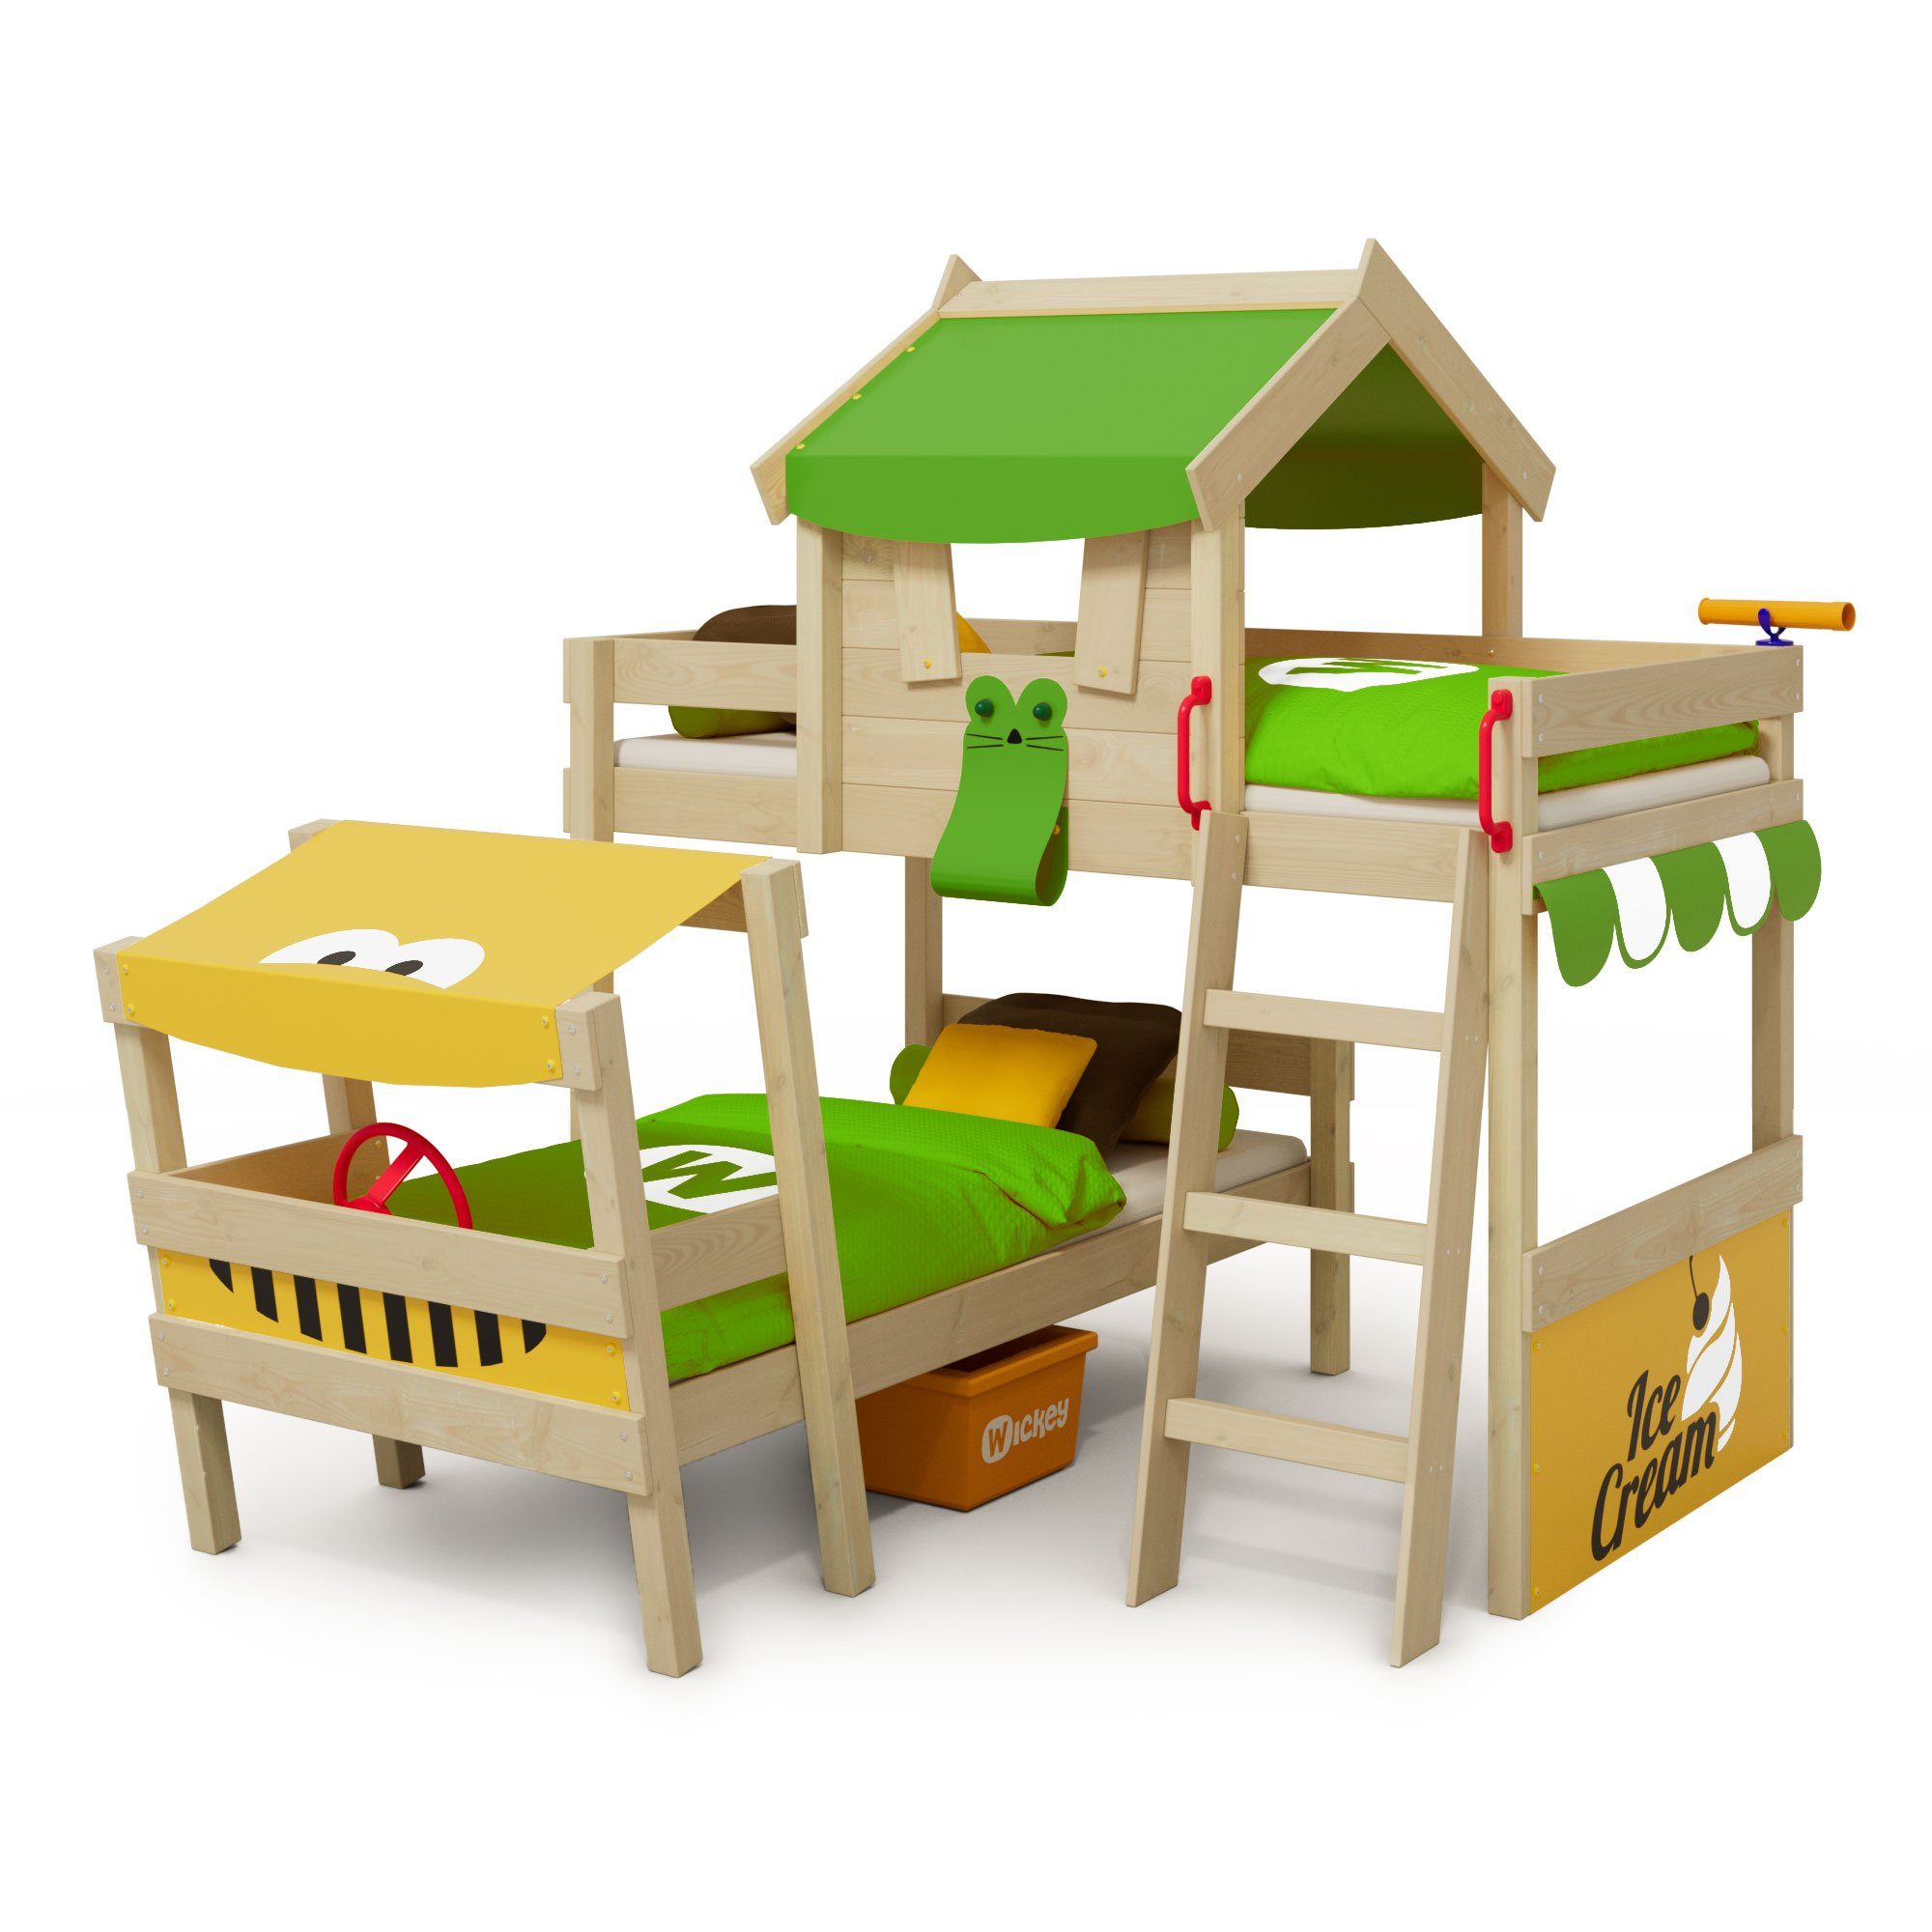 Verkaufsberater Wickey Kinderbett Massivholzbrett Spielbett, (Holzpaket Kinder), Pfosten cm aus Crazy 200 und x Brettern, 90 Trunky für - apfelgrün/gelb Hochbett Spielbett